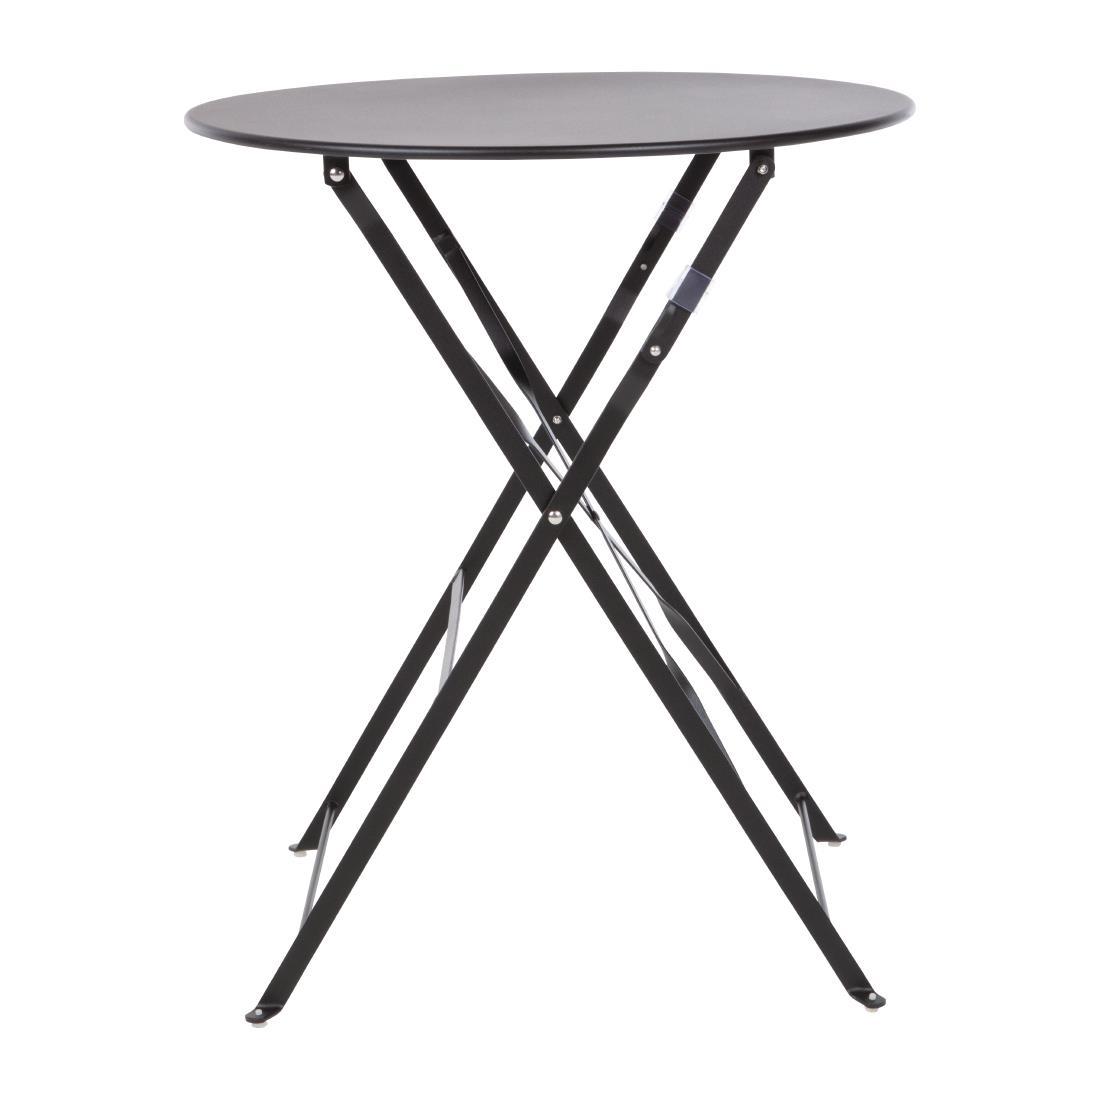 Bolero Black Pavement Style Steel Table 595mm - GH558  - 4